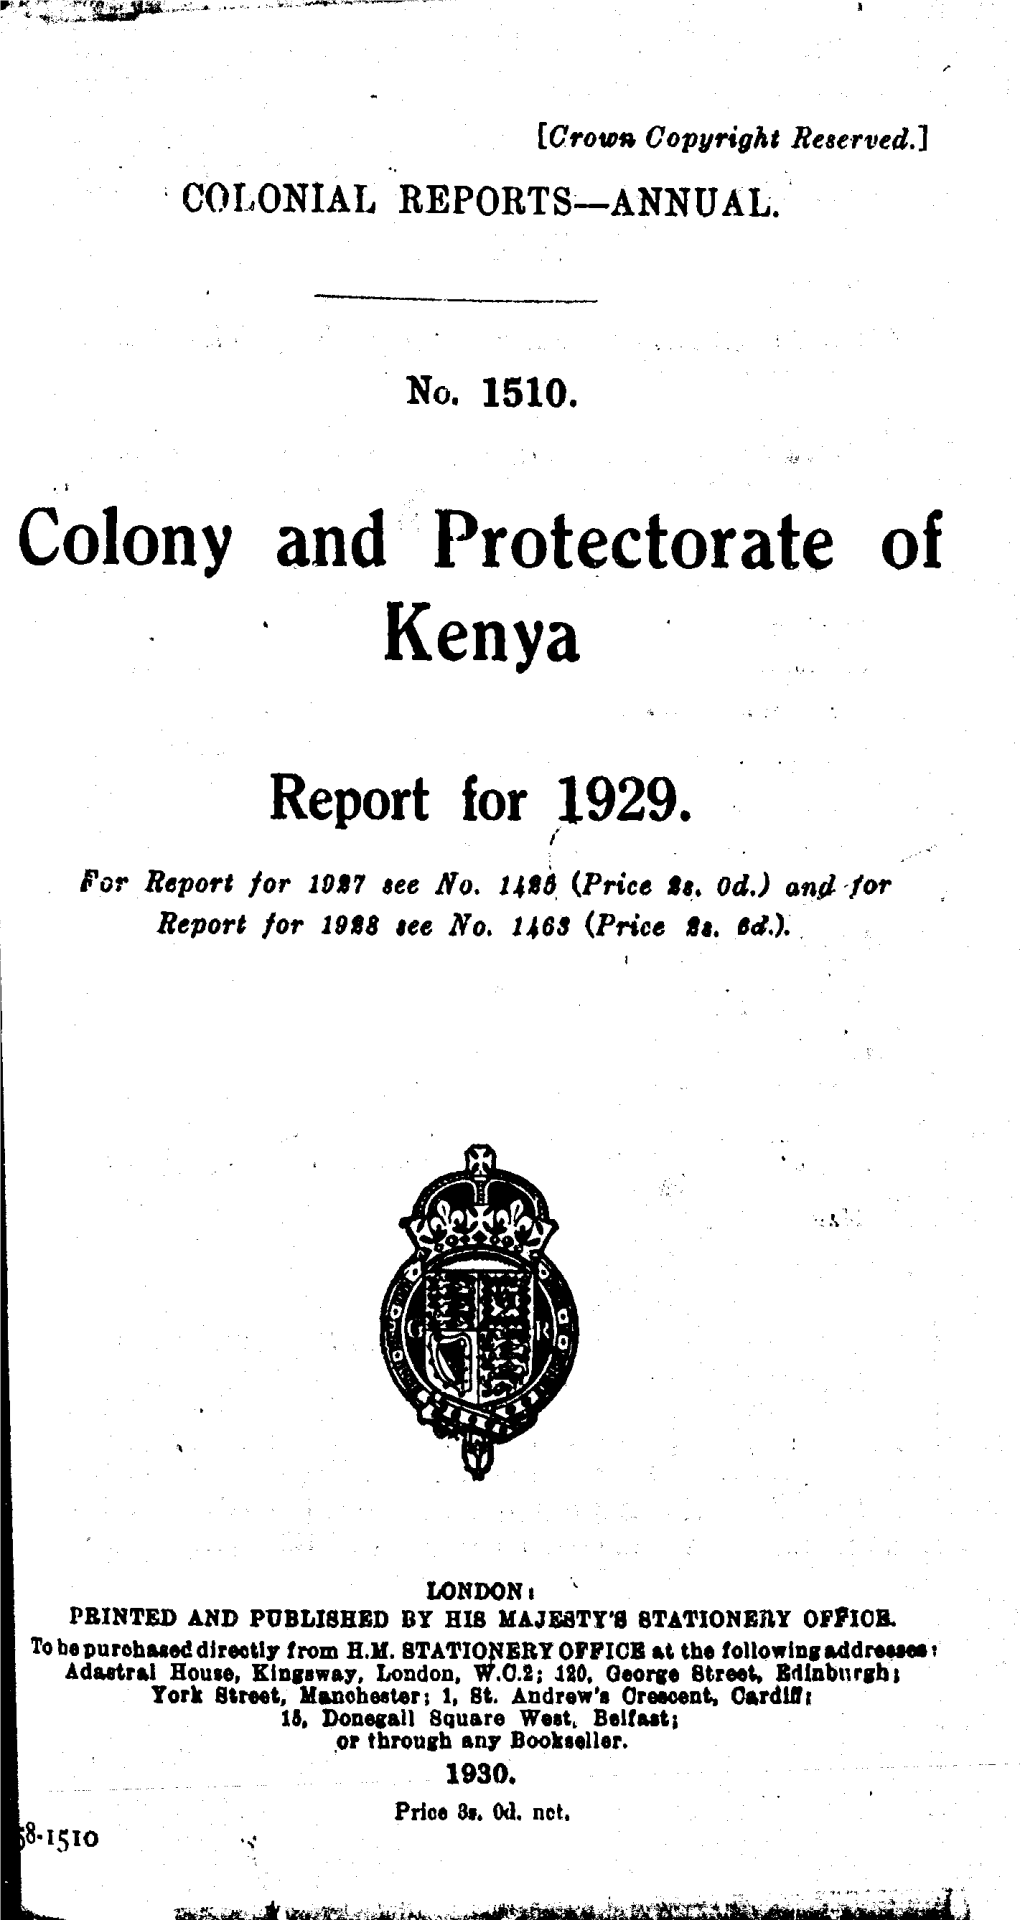 Annual Report of the Colonies, Kenya, 1929